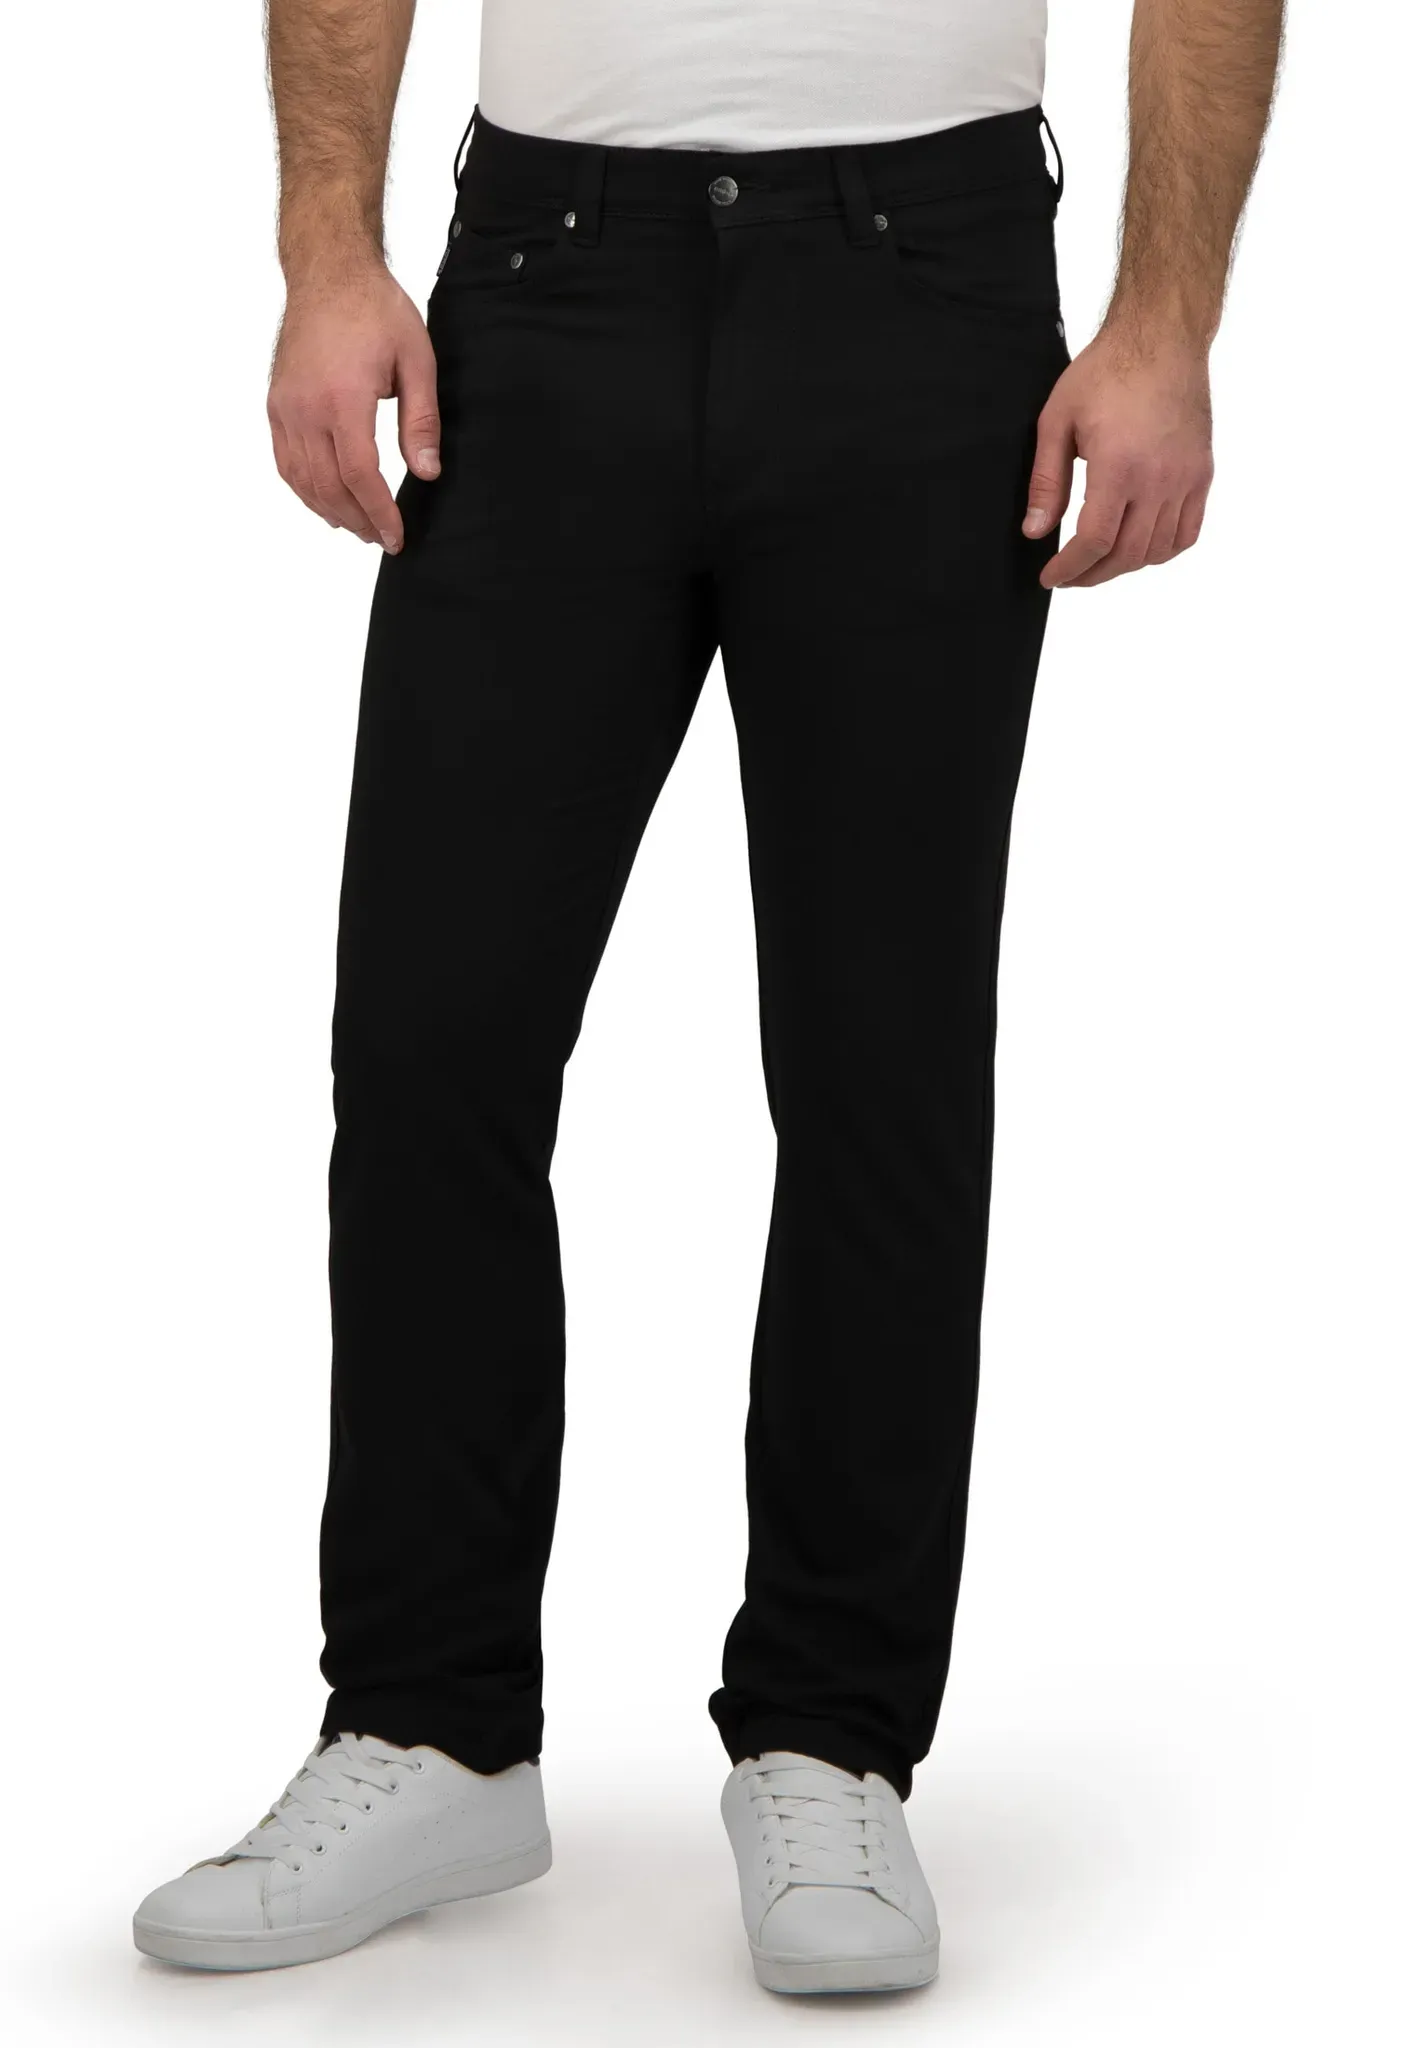 Bequeme Jeans BRÜHL "Genua III 1" Gr. 56, EURO-Größen, schwarz Herren Jeans 5-Pocket-Jeans Straight-fit-Jeans Stretchjeans Stretch